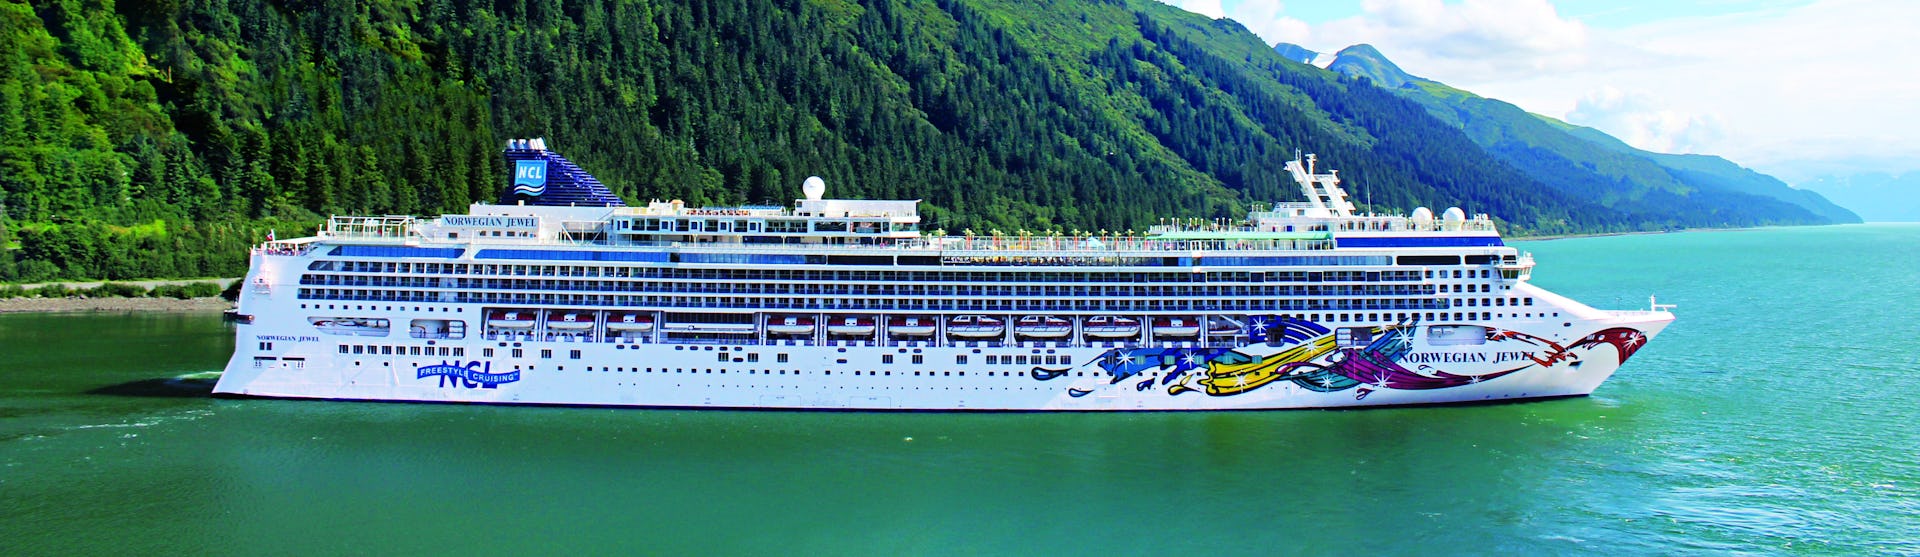 Norwegian Jewel - Norwegian Cruise Line